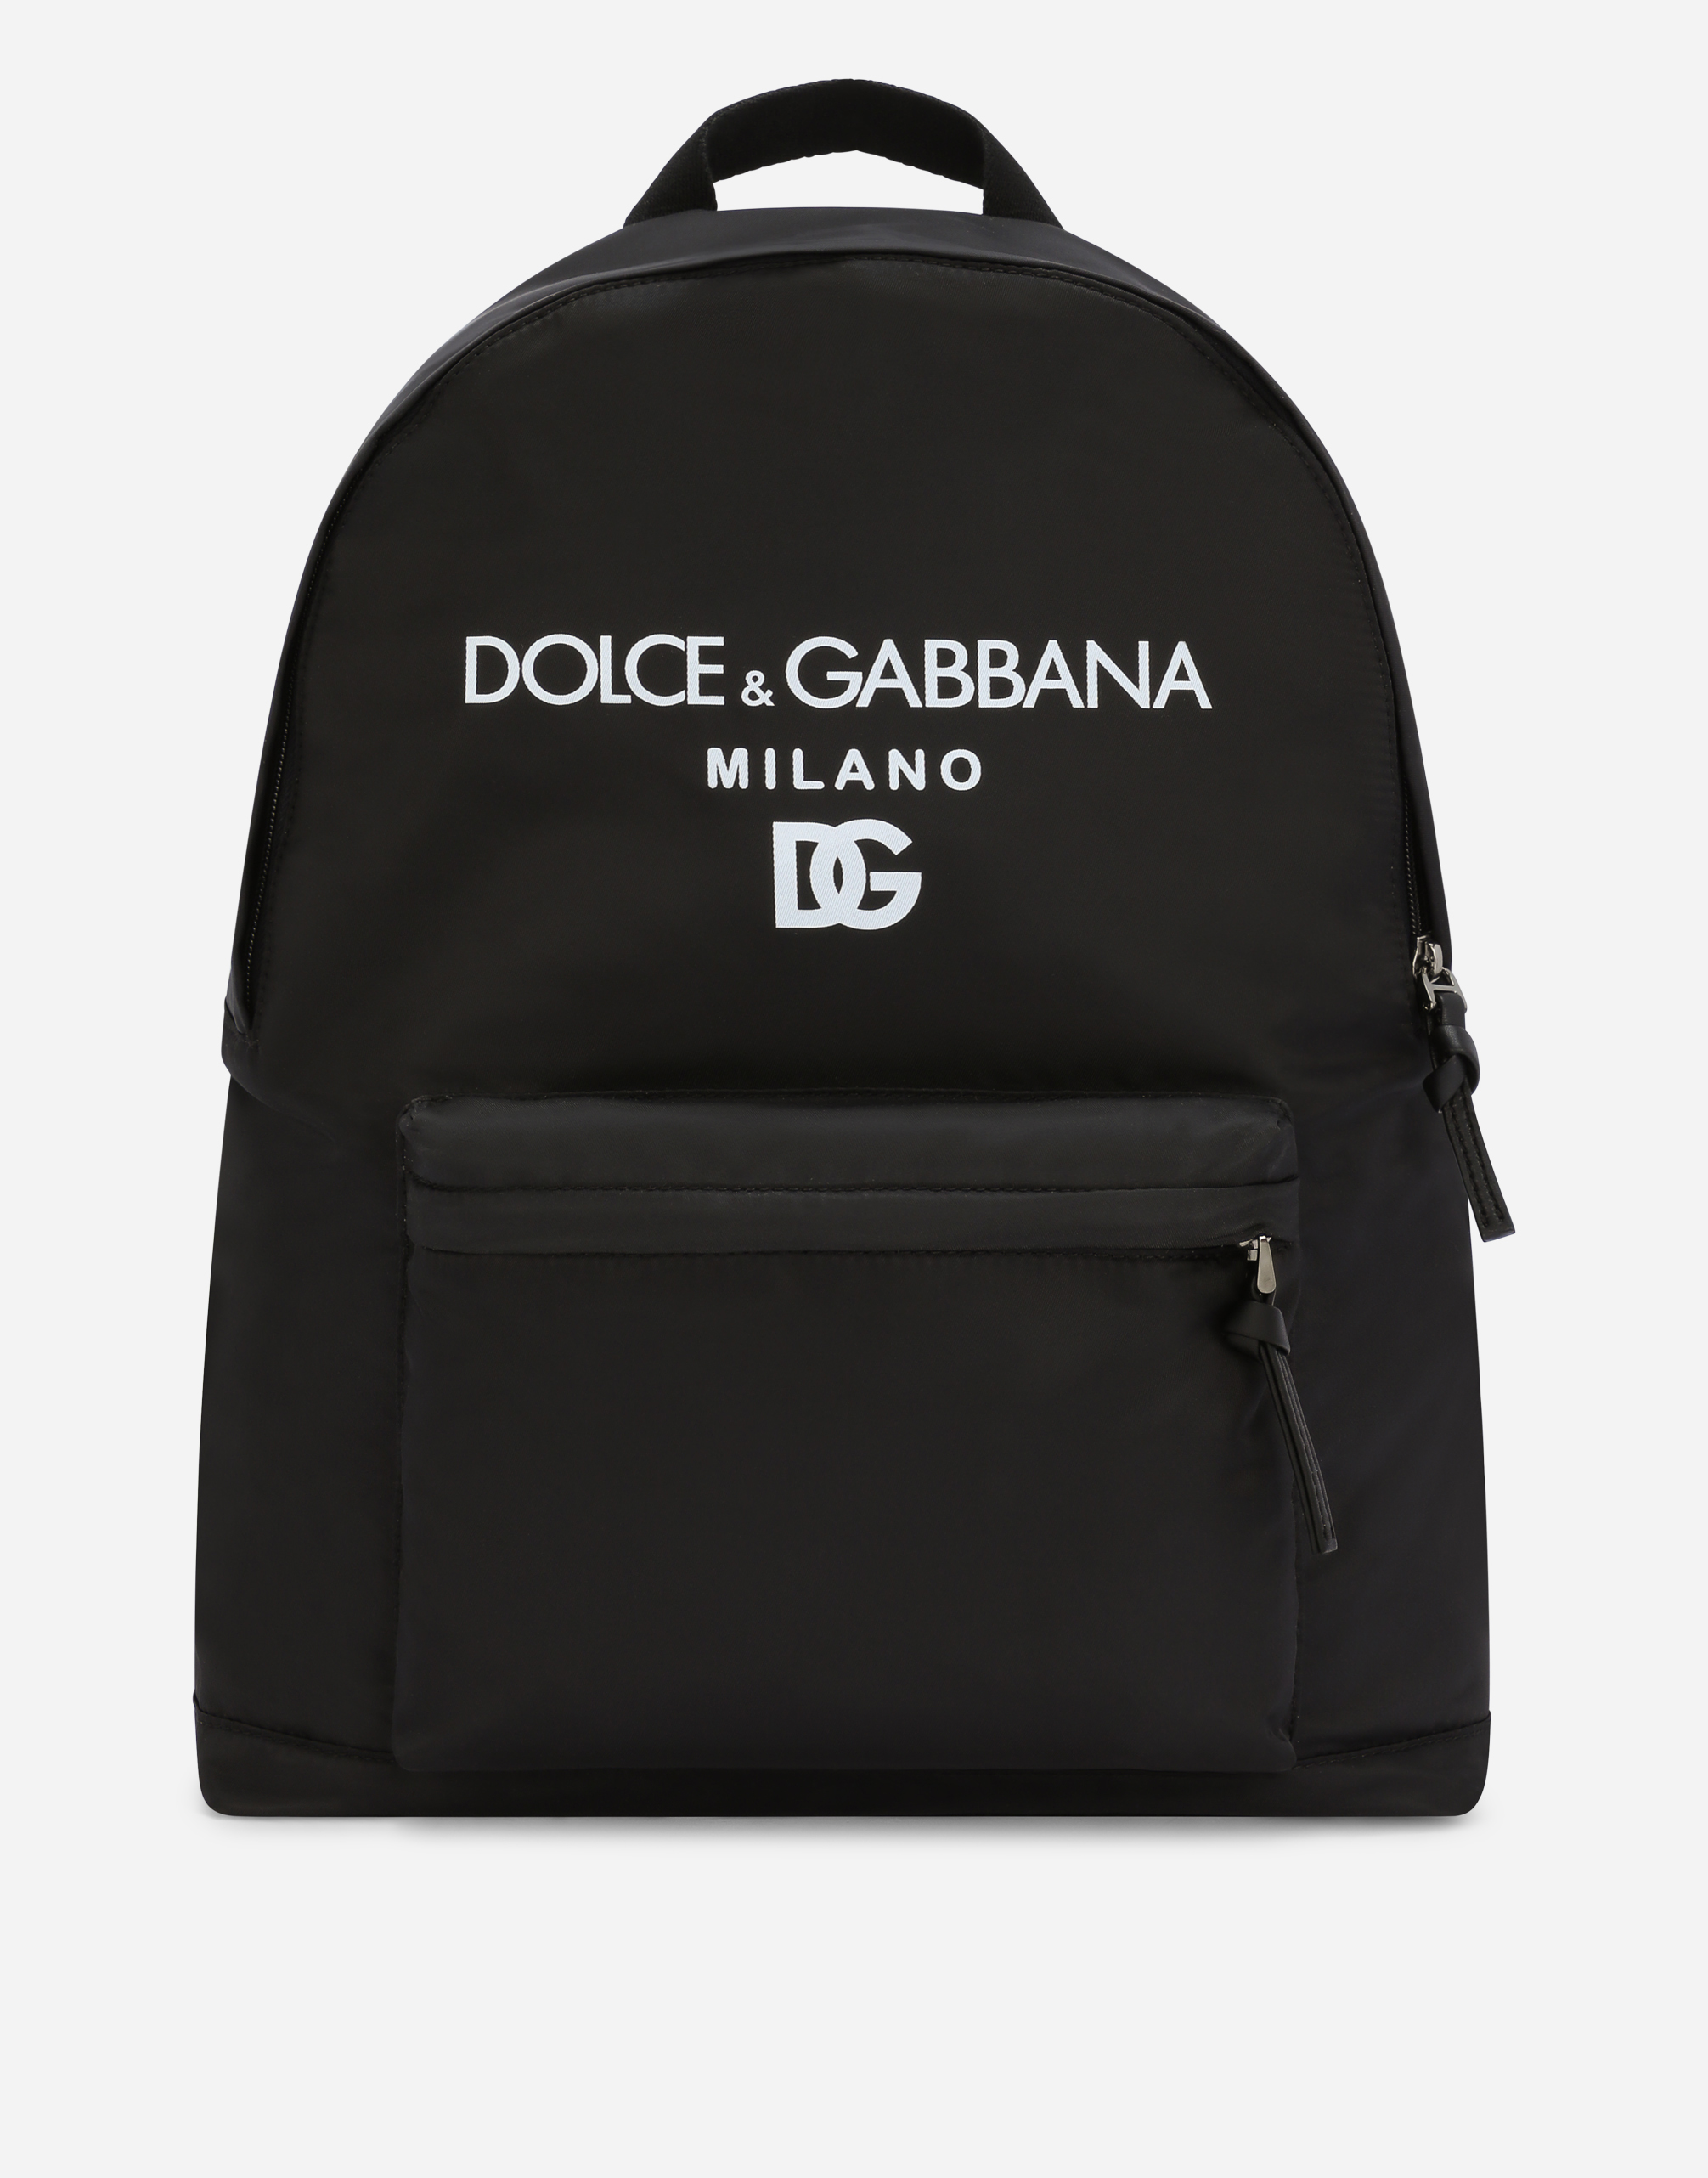 Dolce & Gabbana Kids' Nylon Backpack With Dolce&gabbana Milano Print In Black